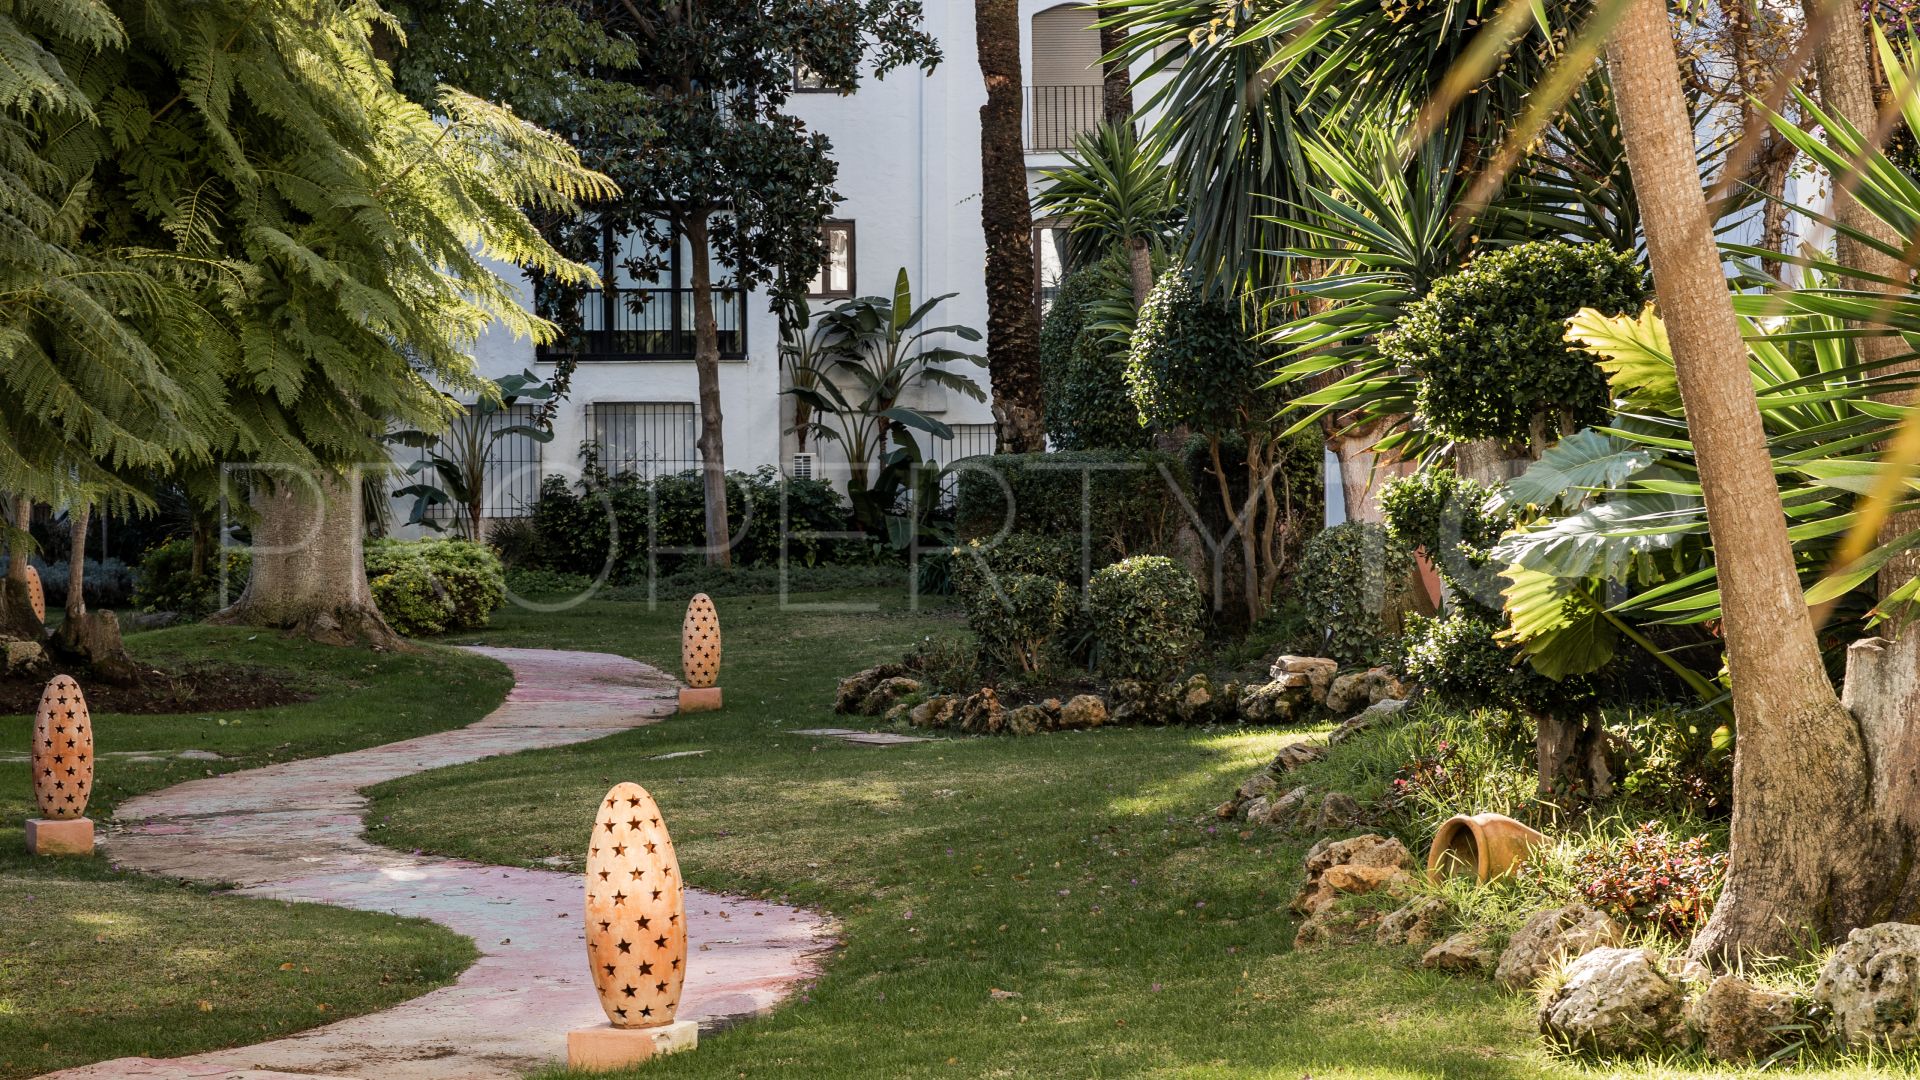 Jardines del Puerto apartment for sale